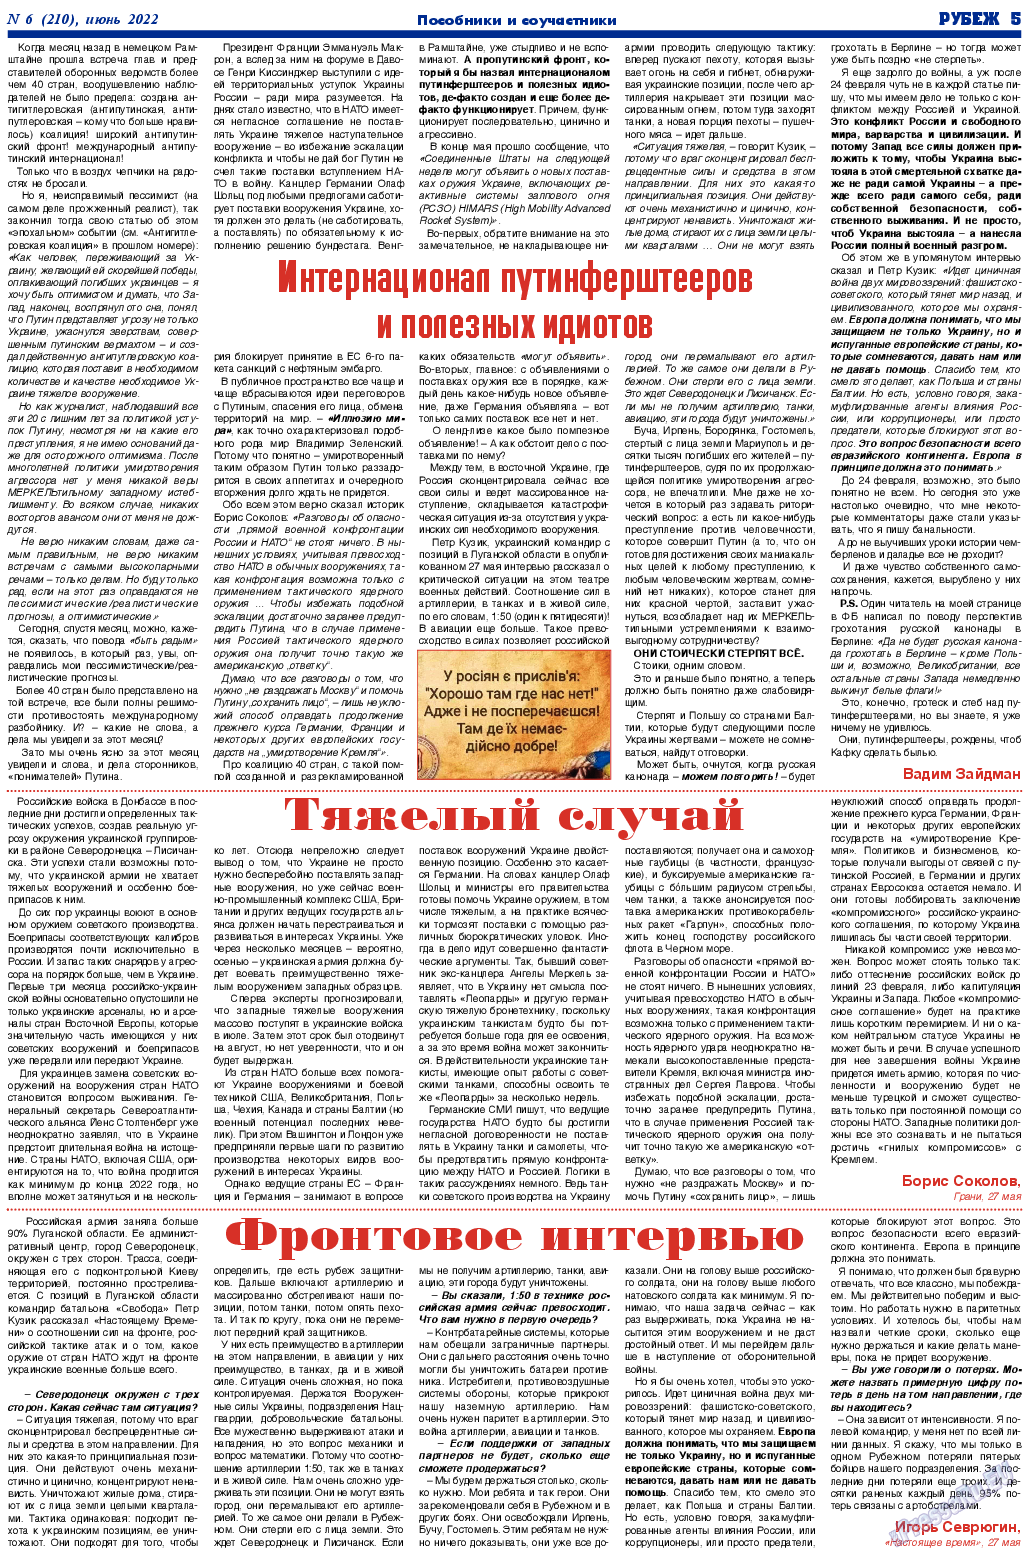 Рубеж, газета. 2022 №6 стр.5